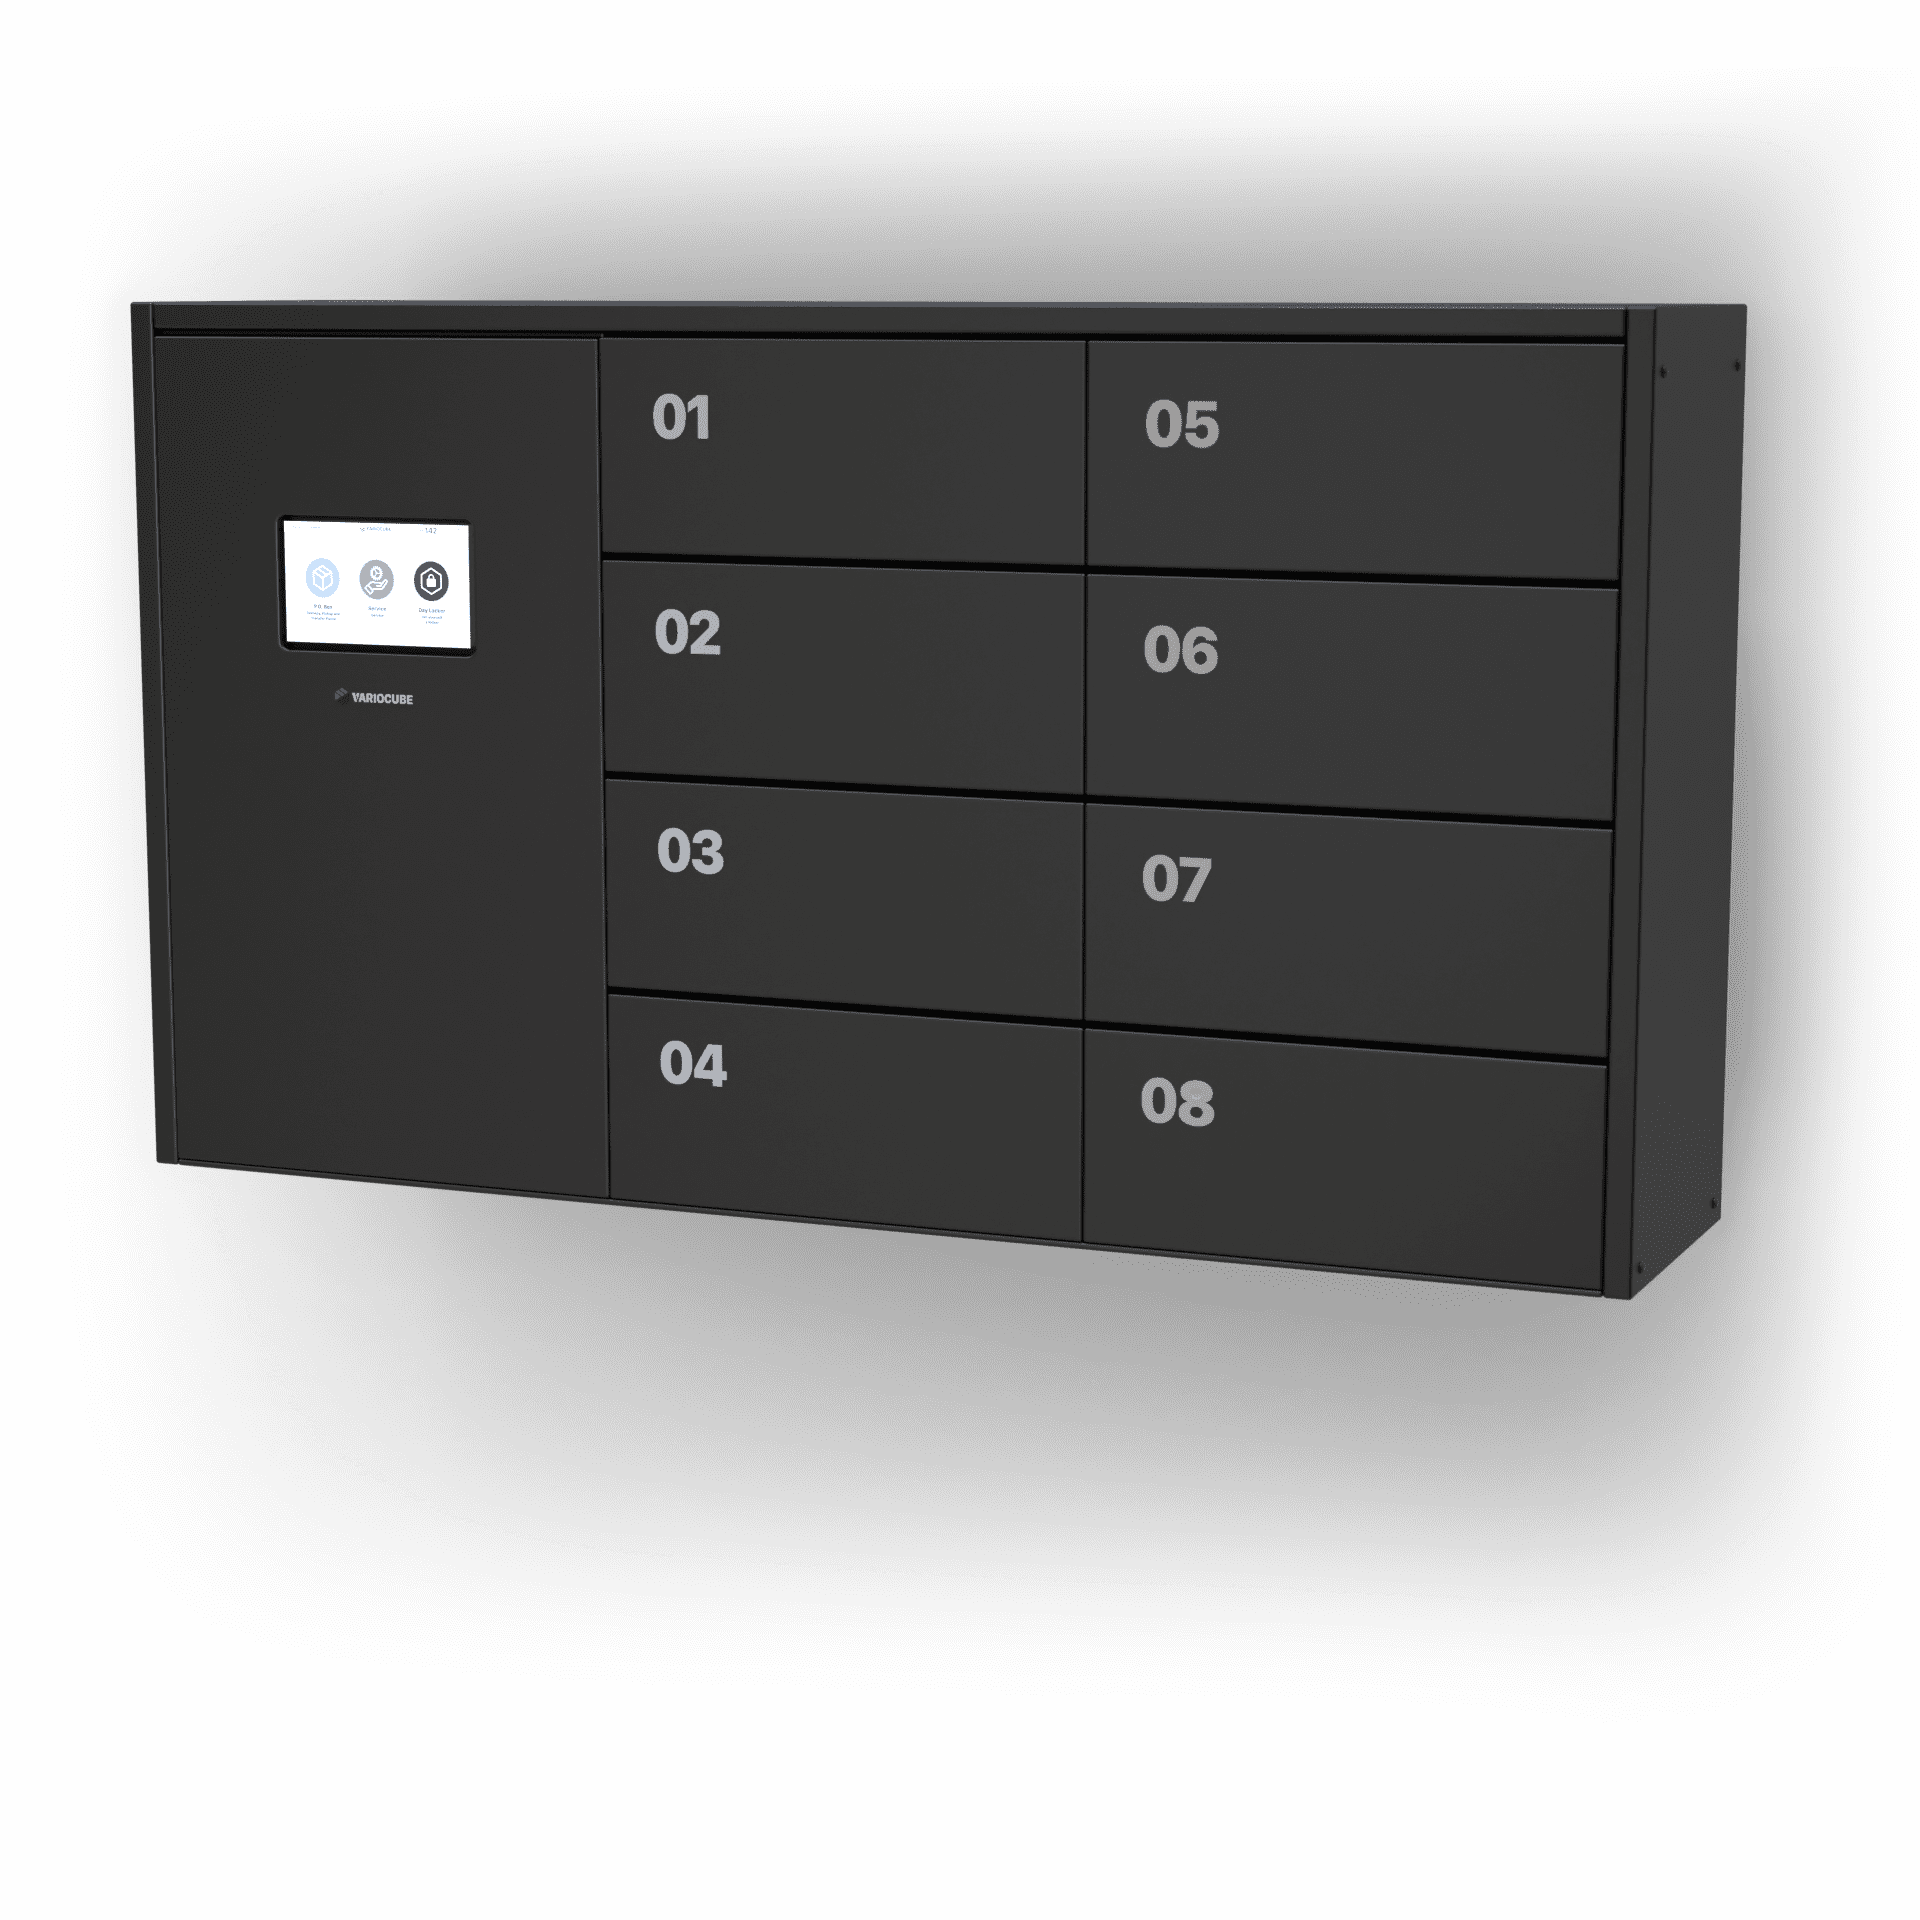 MicroLine compact lockers